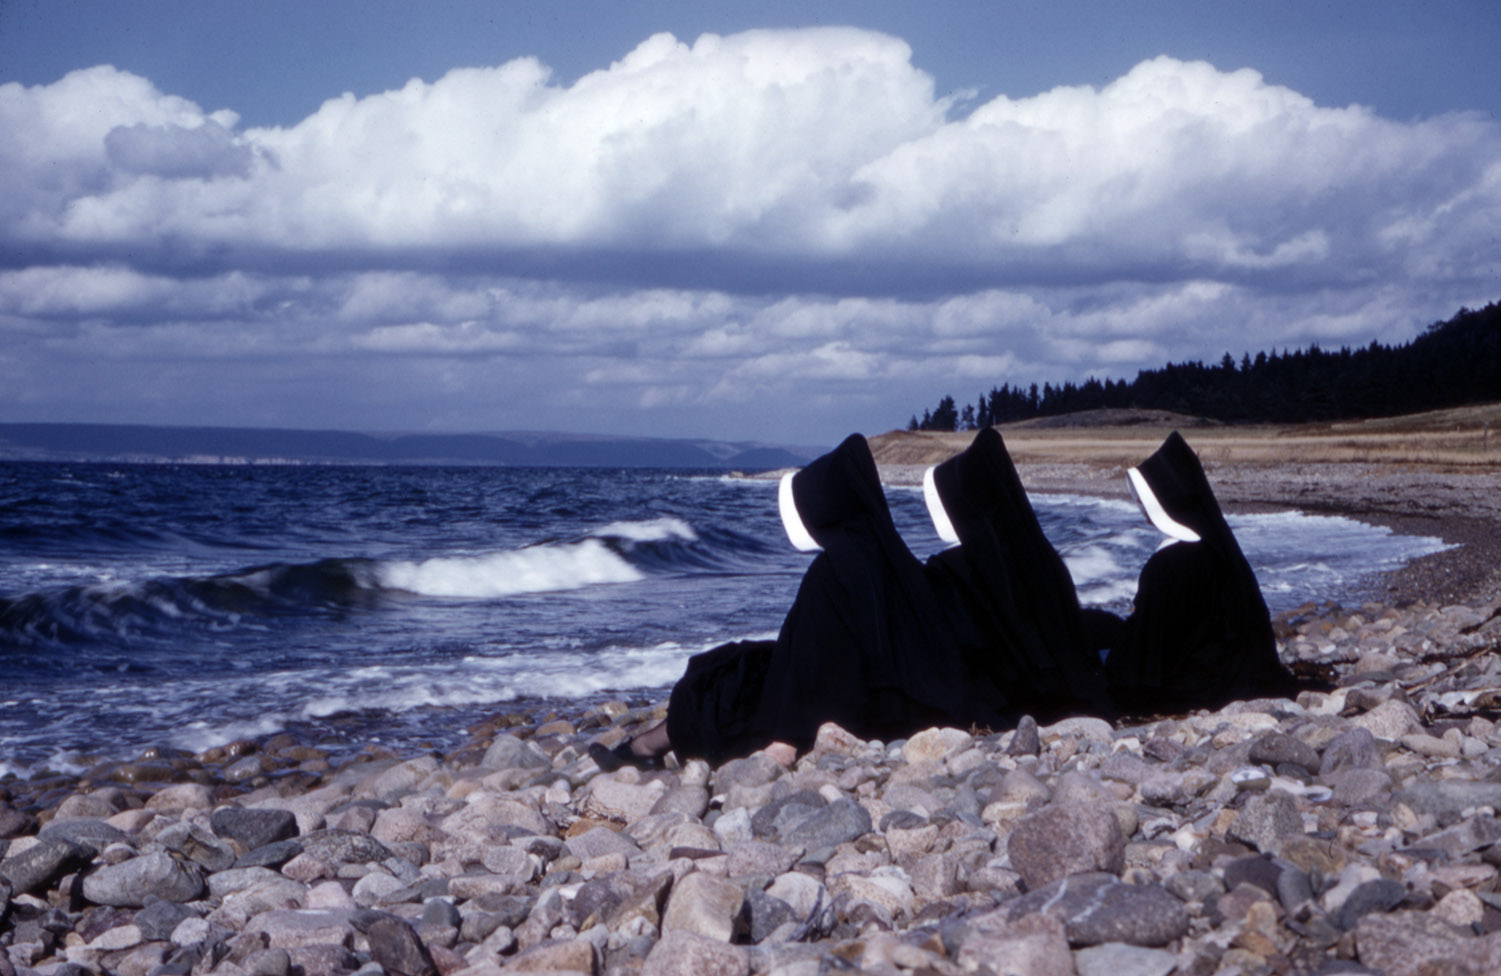 communityalbums - Sisters of Charity-Halifax sitting on rocks overlooking the ocean, Irish Cove, Nova Scotia.